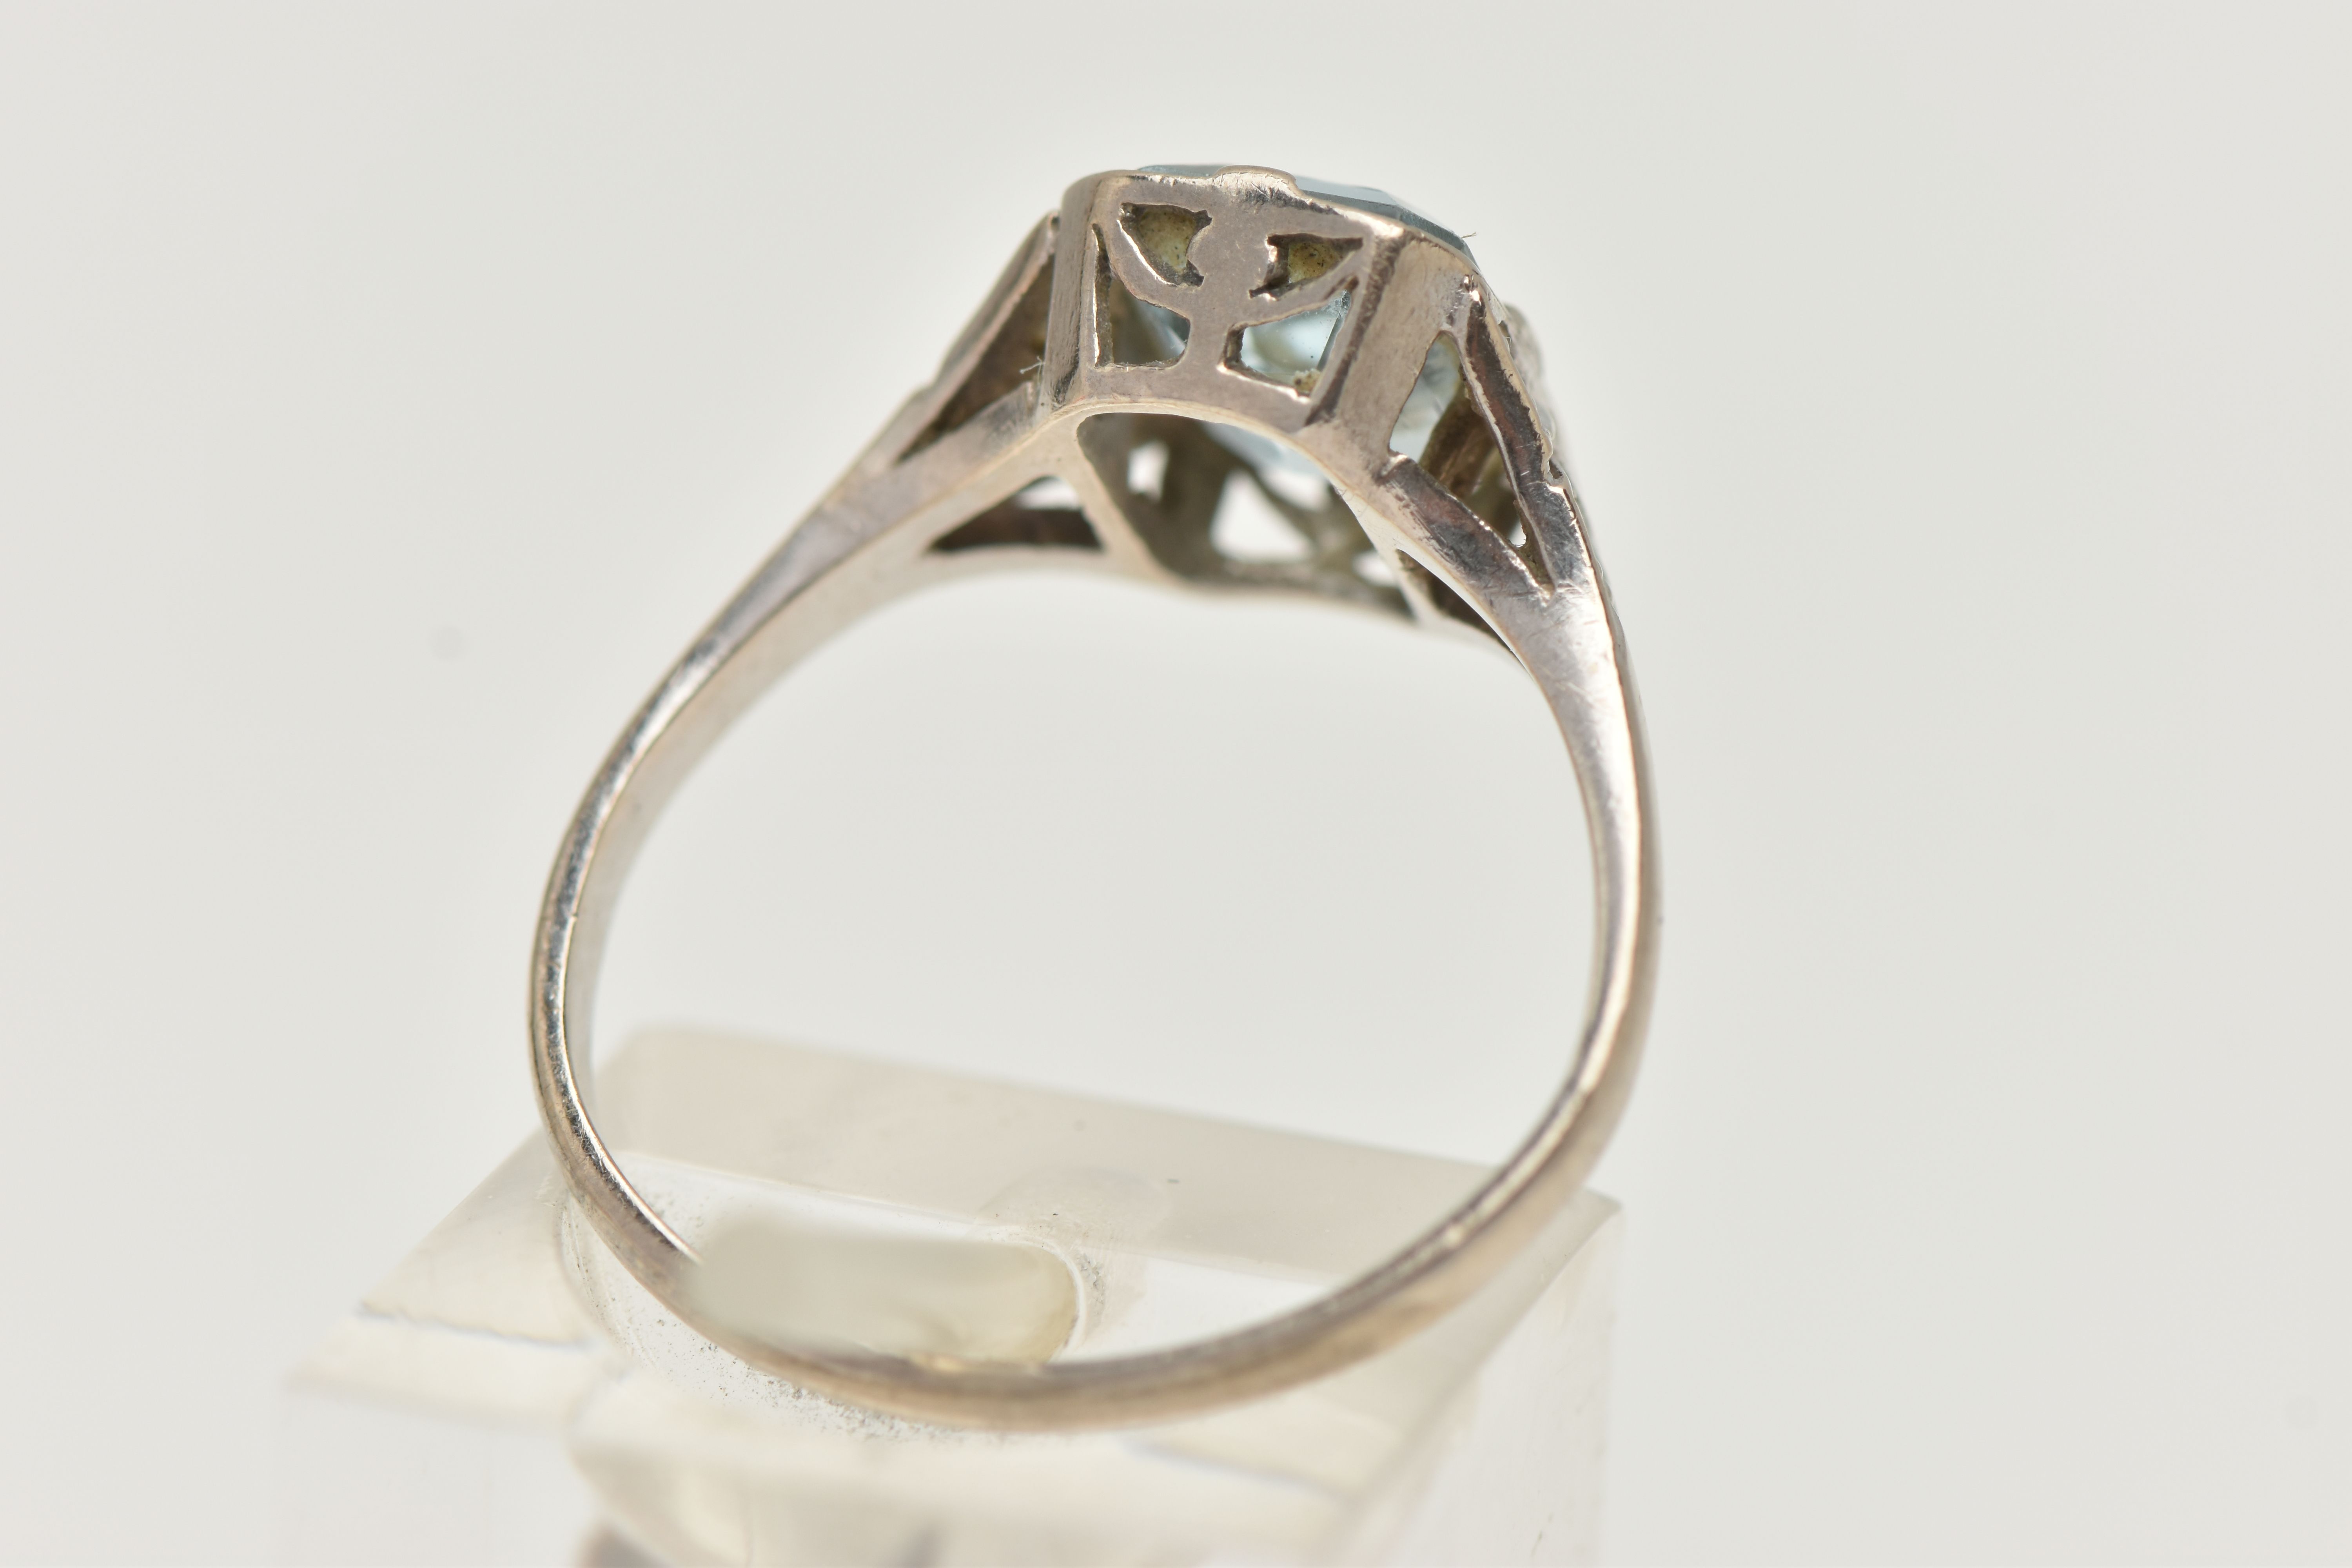 AN AQUAMARINE AND DIAMOND RING, principally set with a rectangular cut aquamarine, approximate - Image 3 of 4